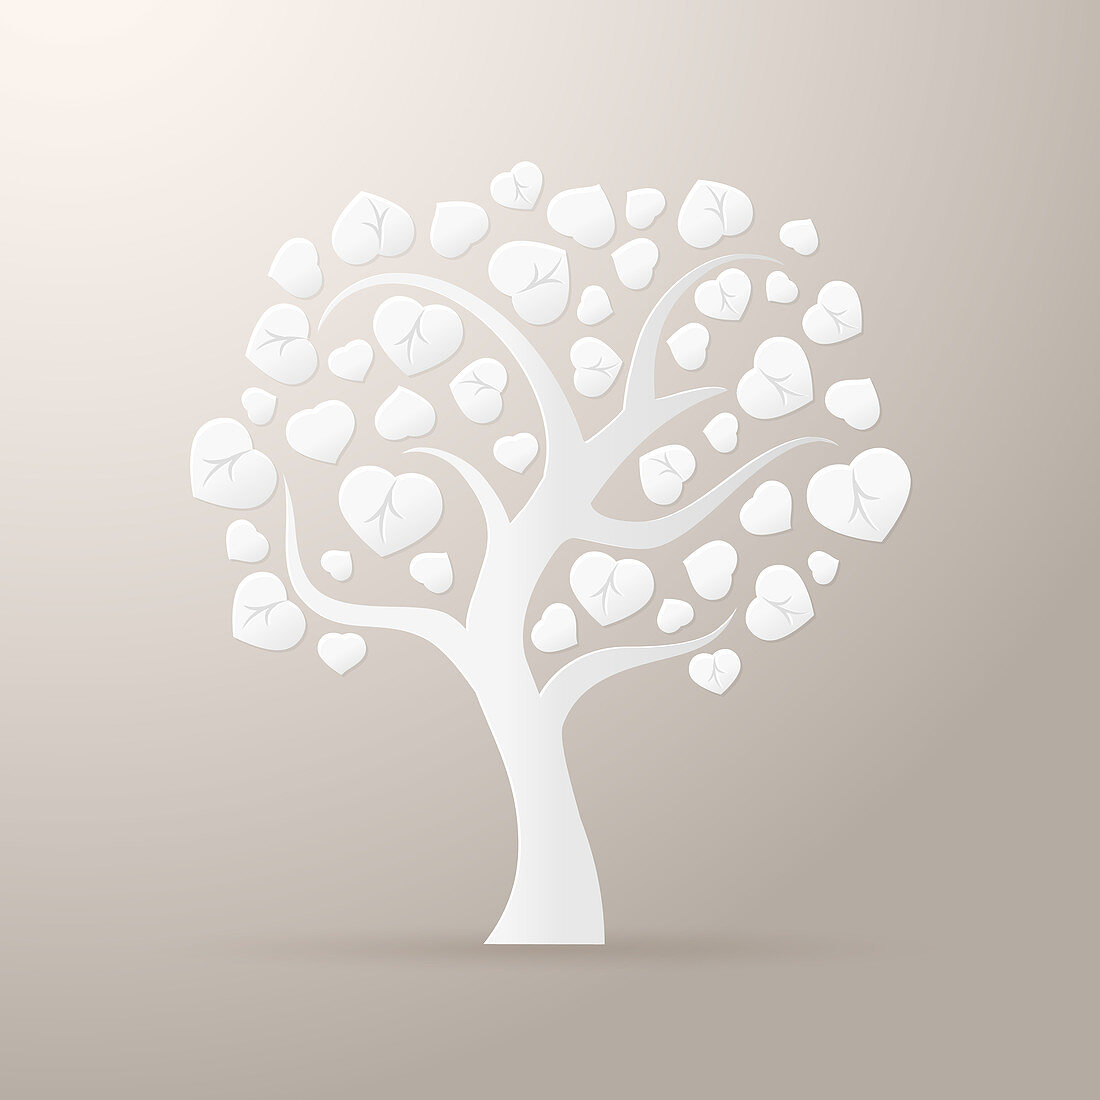 Paper tree, illustration